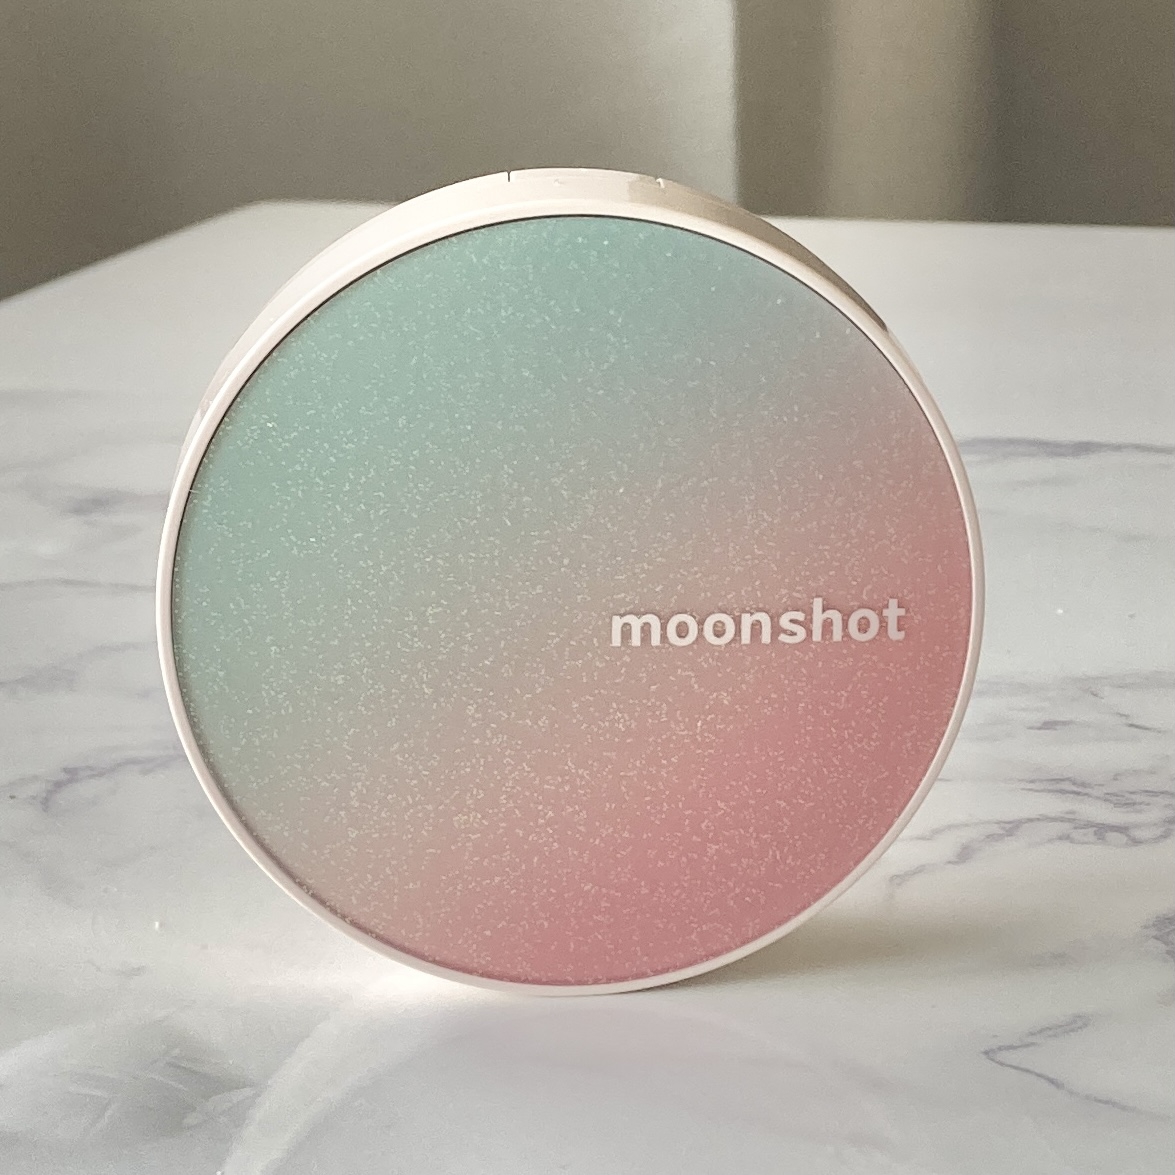 moonshot(ムーンショット) マイクロカーミングフィット クッションファンデを使ったみゆさんのクチコミ画像5